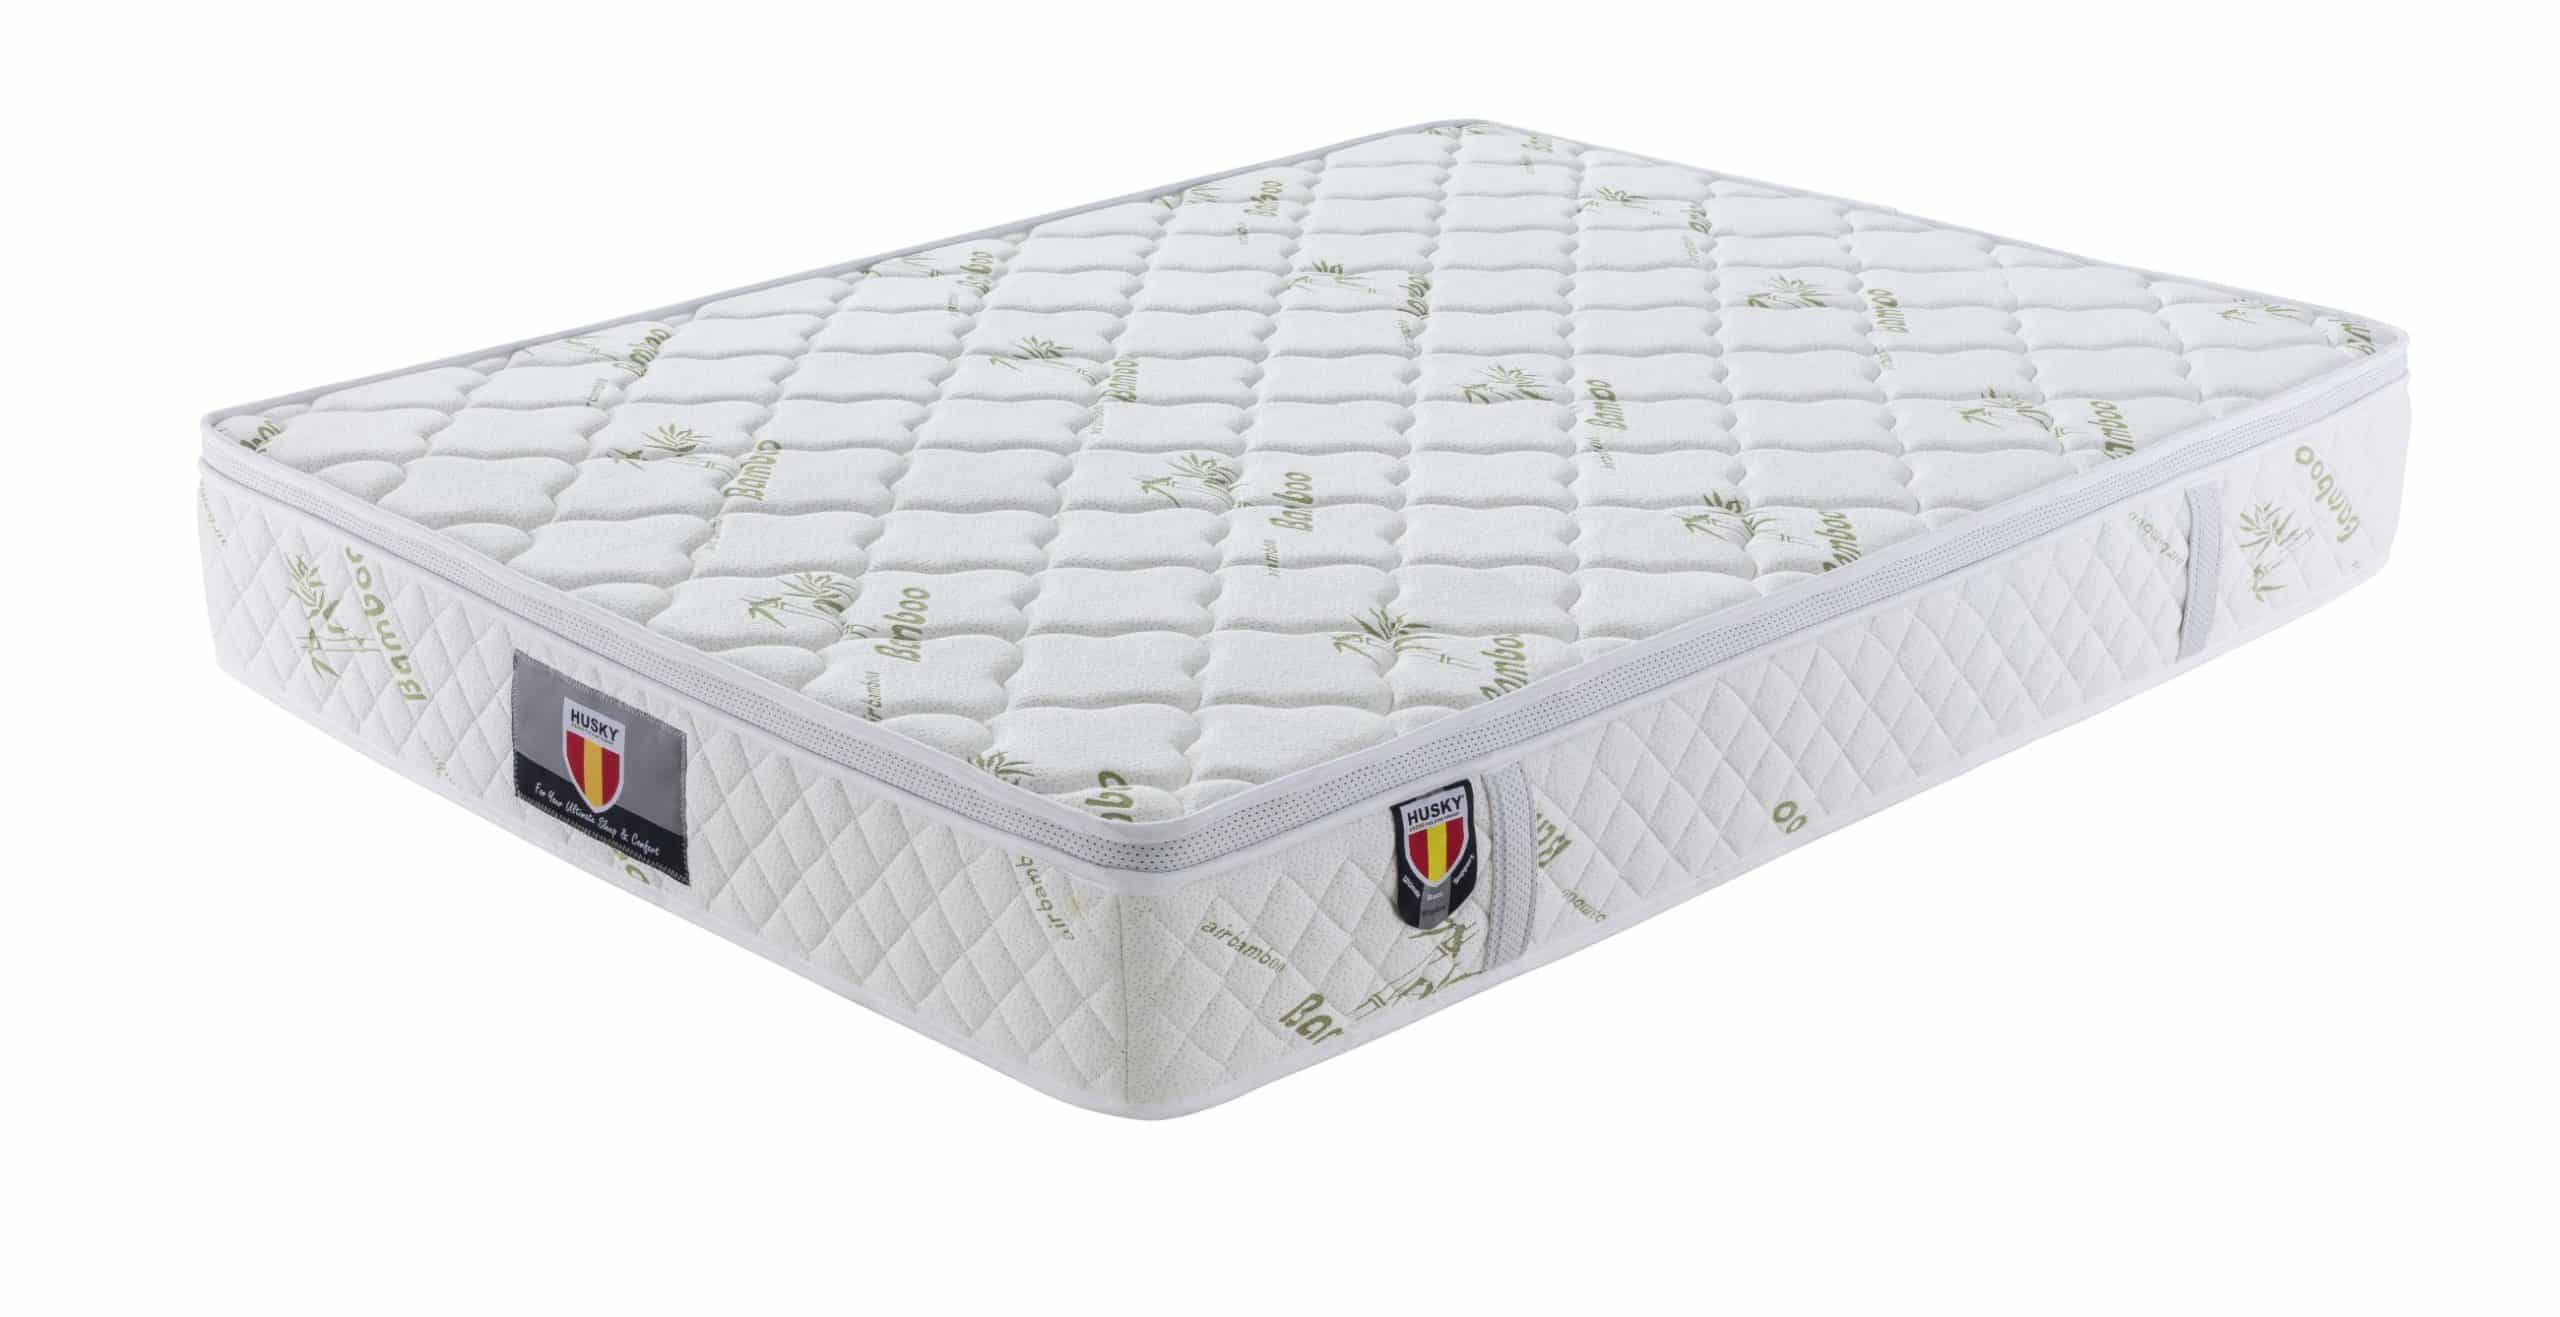 4 Kingdom Husky furniture and mattress five star comfort Pockect coil Bambo Cover euro Pillow top mattress